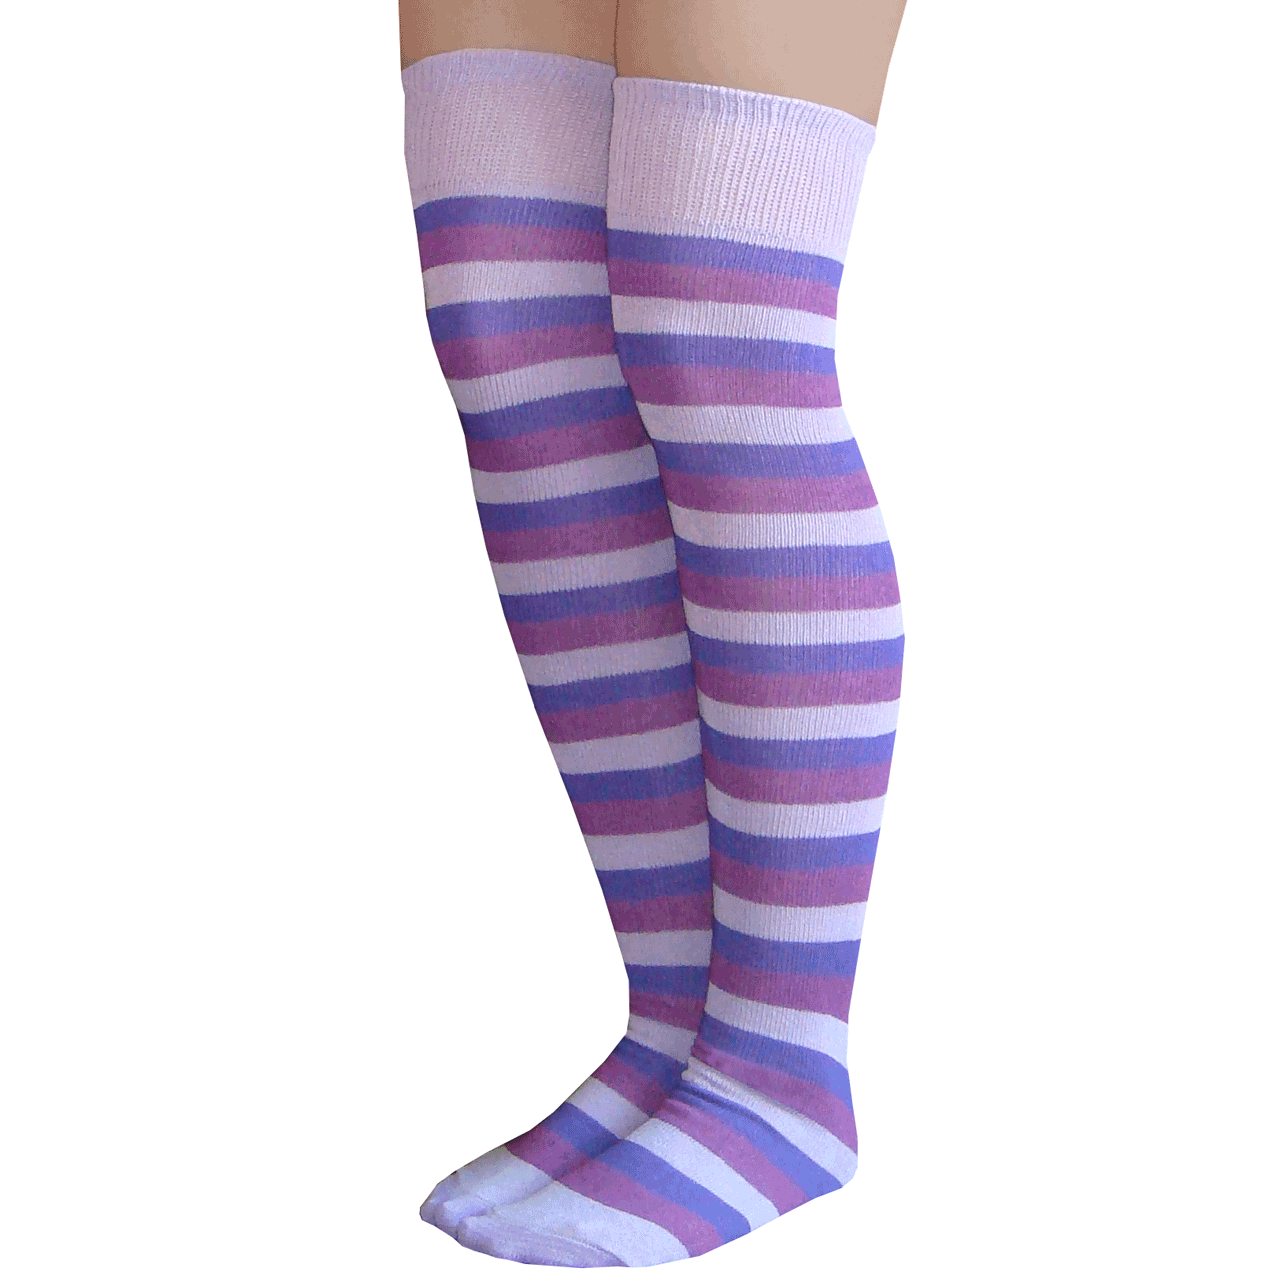 Royal Blue Socks Woman Socks Urban Wear Xmas Gift Socks Fun Socks 